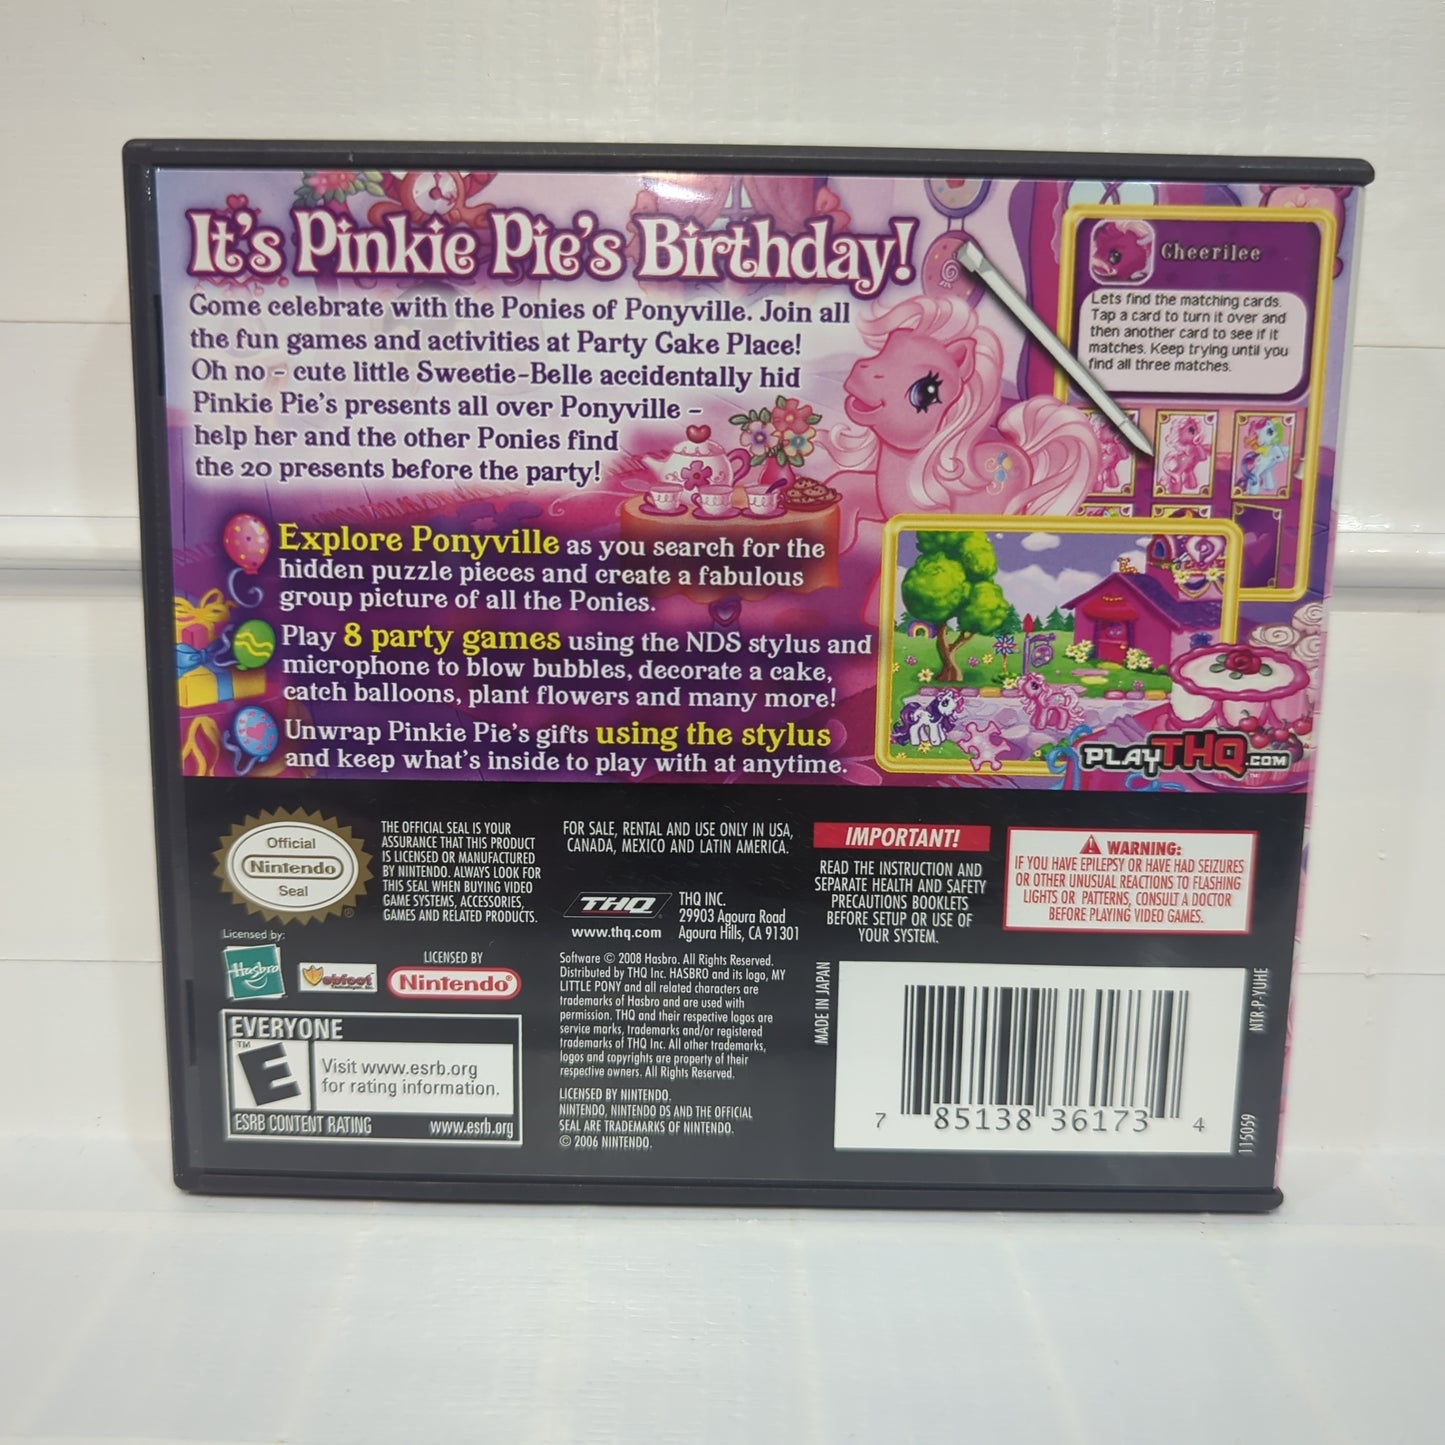 My Little Pony Pinkie Pie's Party - Nintendo DS